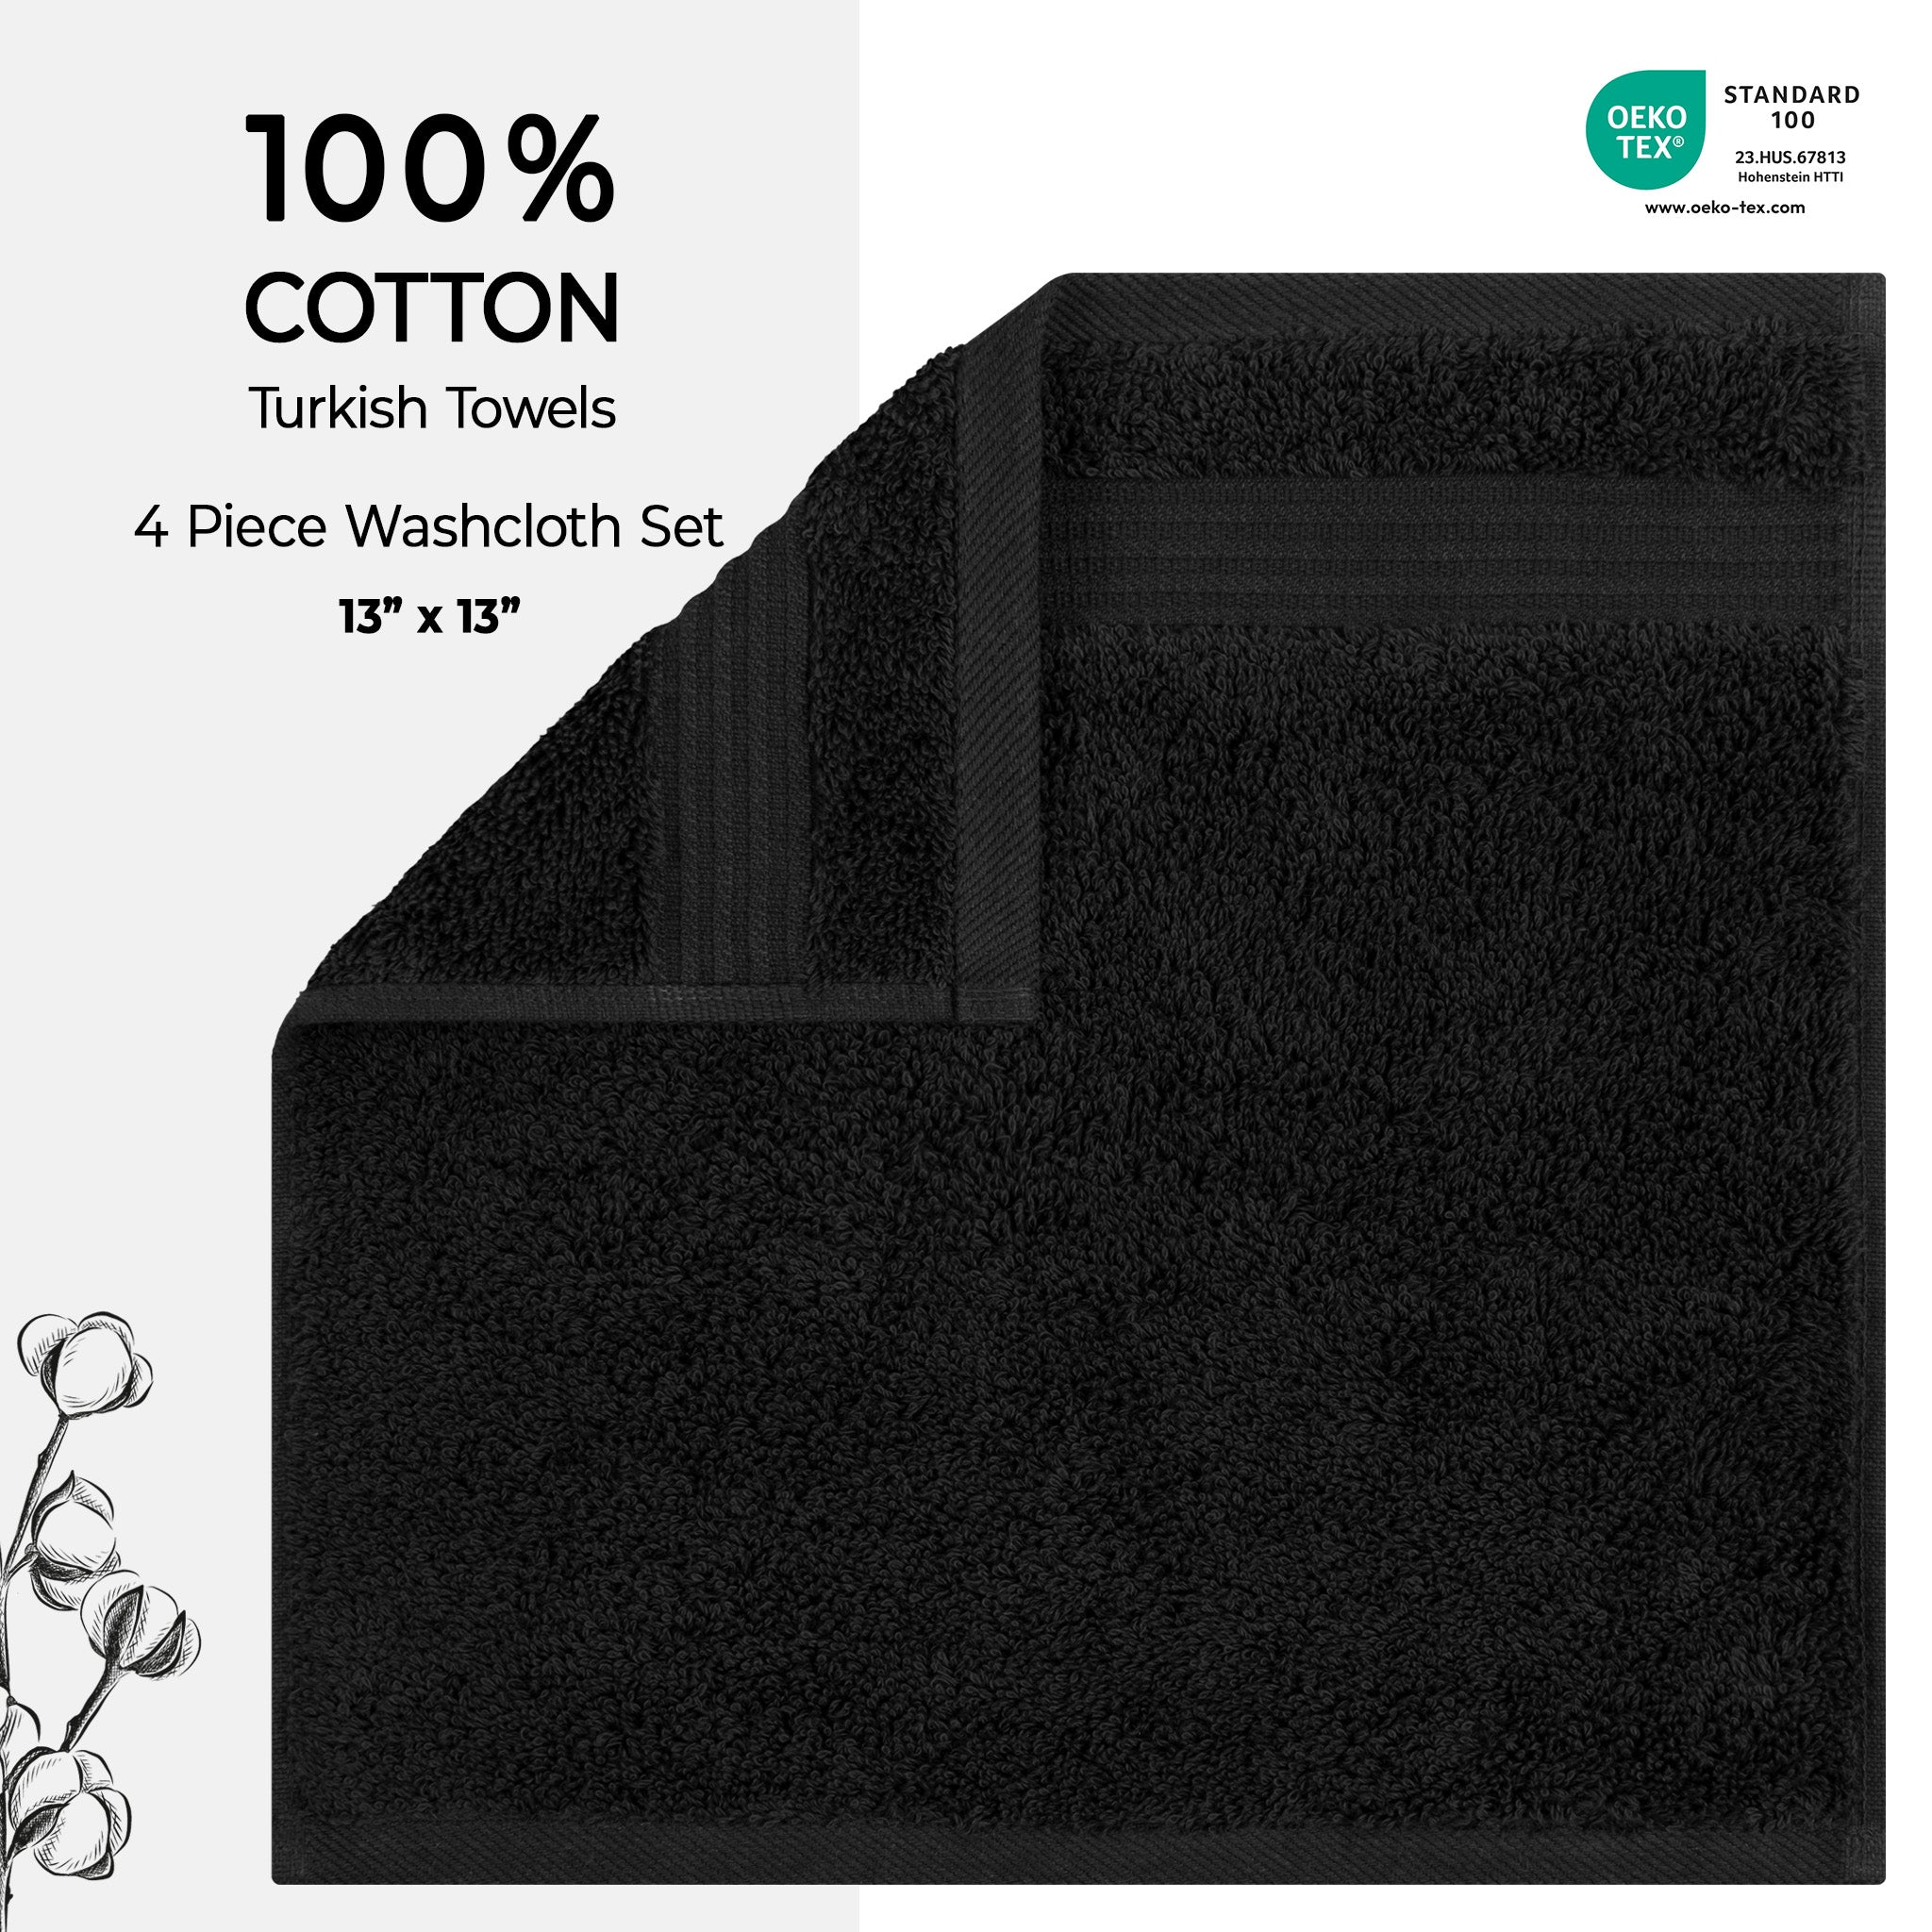 American Soft Linen Bekos 100% Cotton Turkish Towels, 4 Piece Washcloth Towel Set -black-02